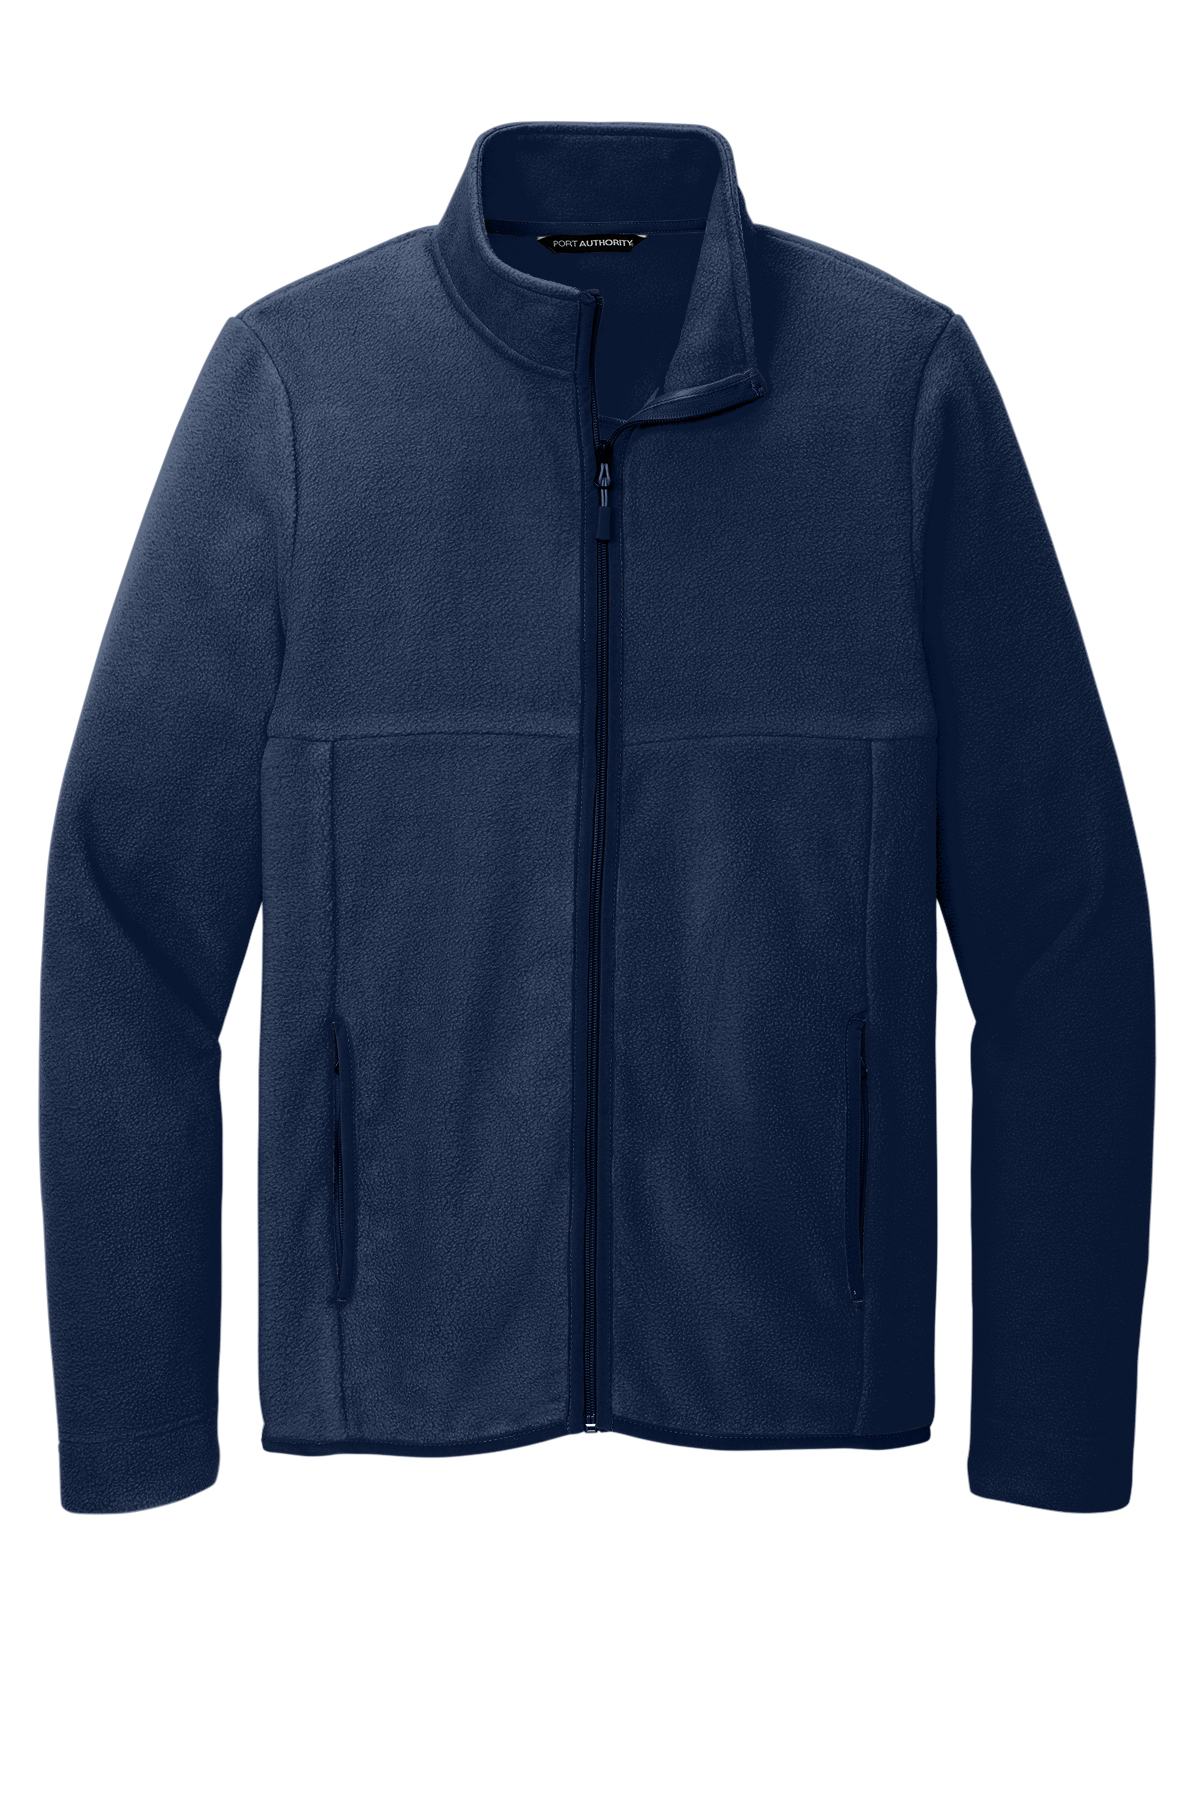 Port Authority Connection Fleece Jacket | Product | SanMar